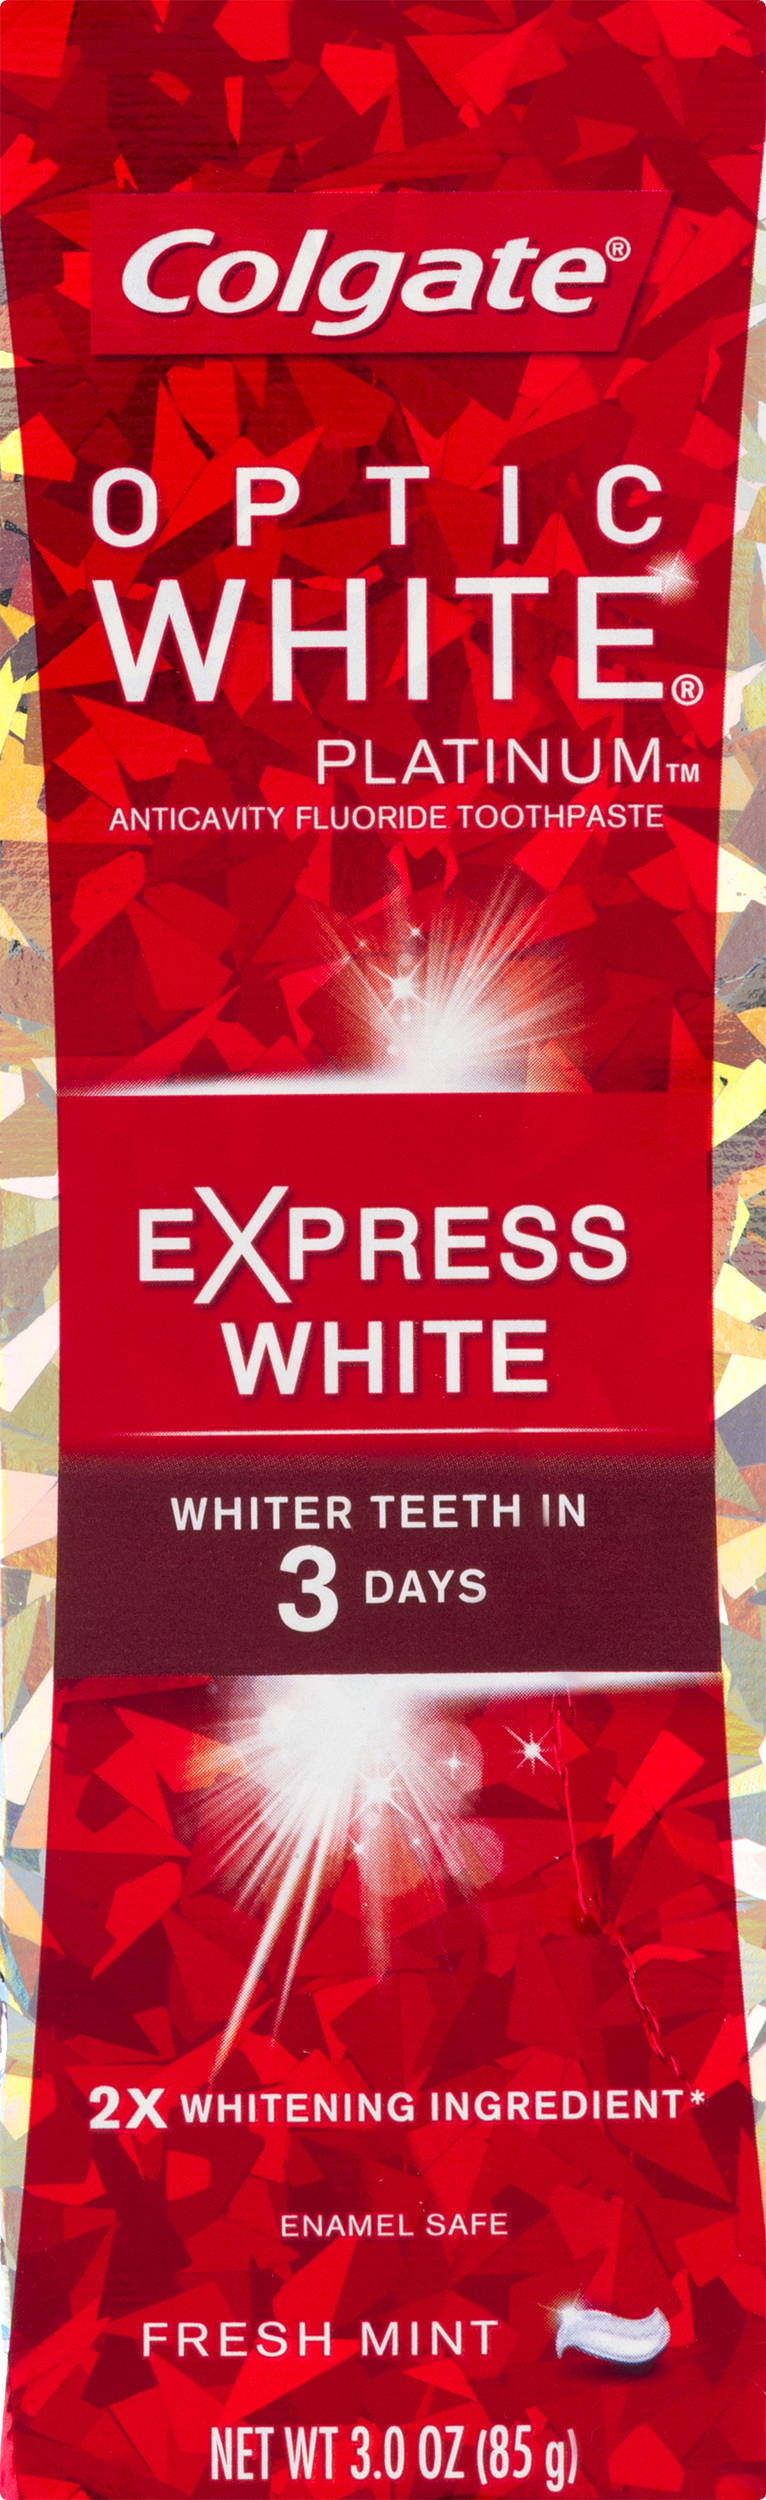 Colgate Optic White Express White Whitening Toothpaste - 3 ounce - image 1 of 8